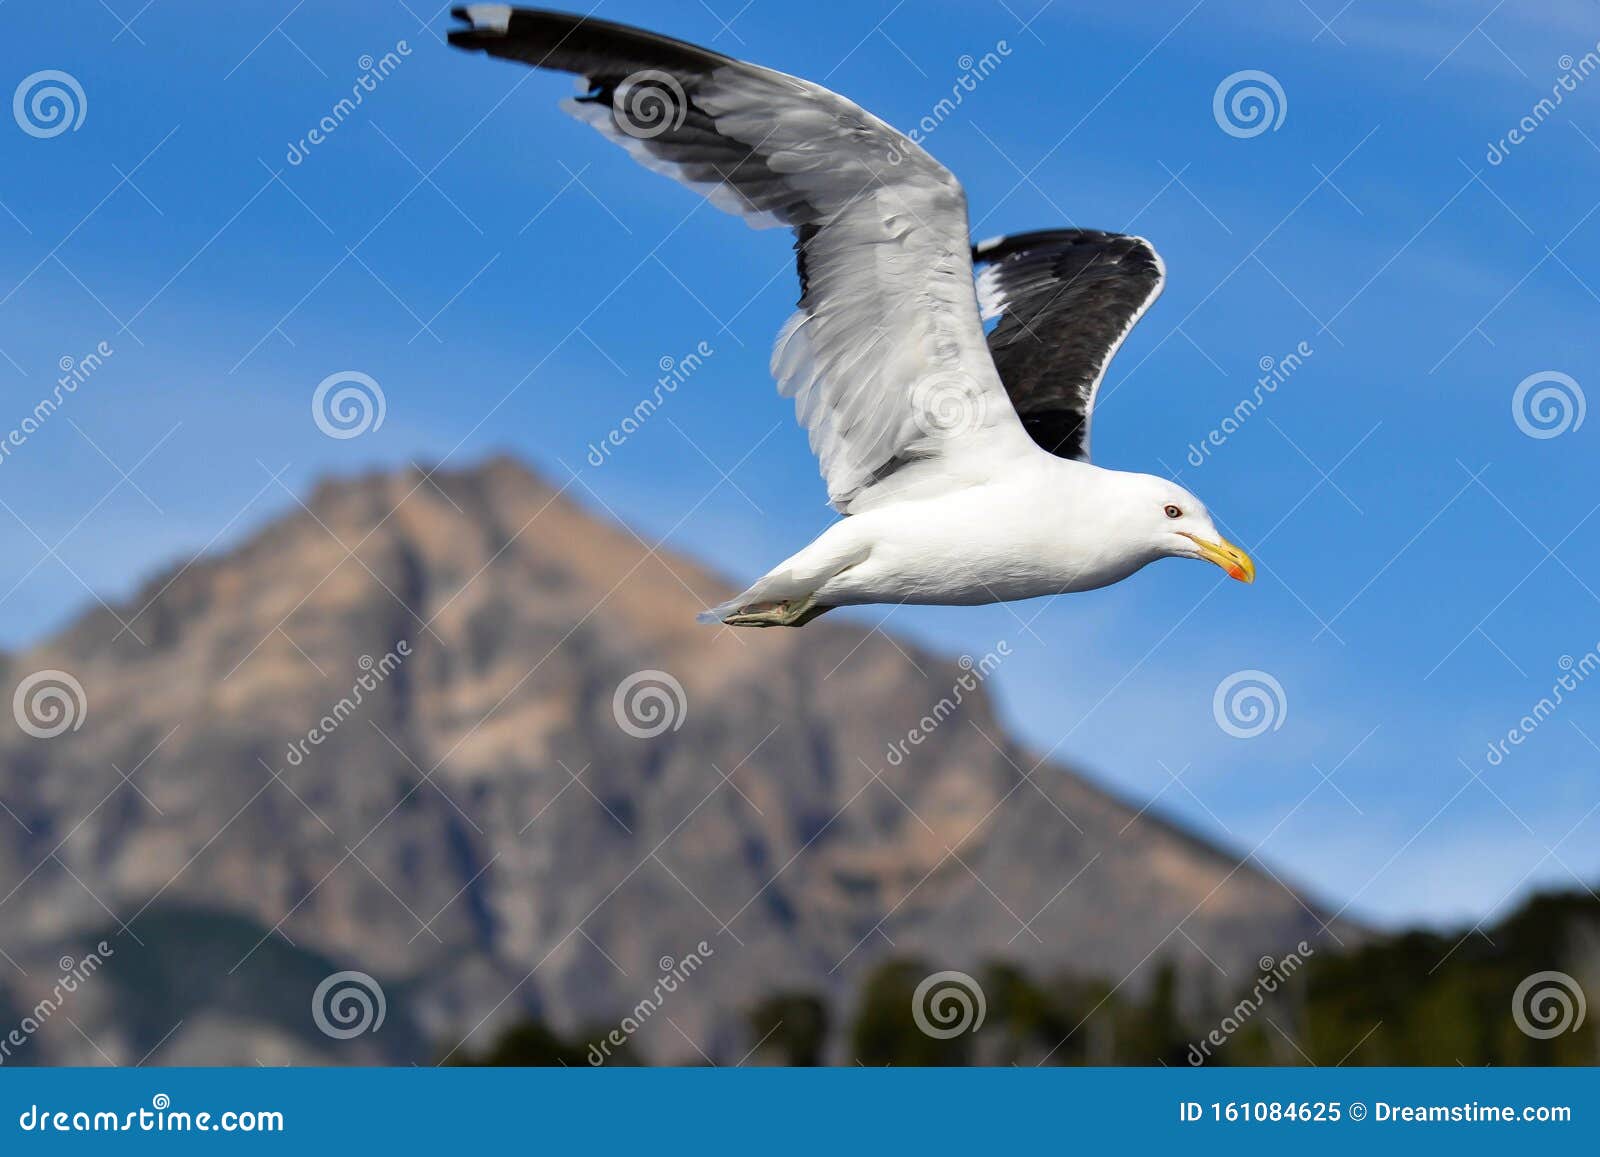 patagonian seagull